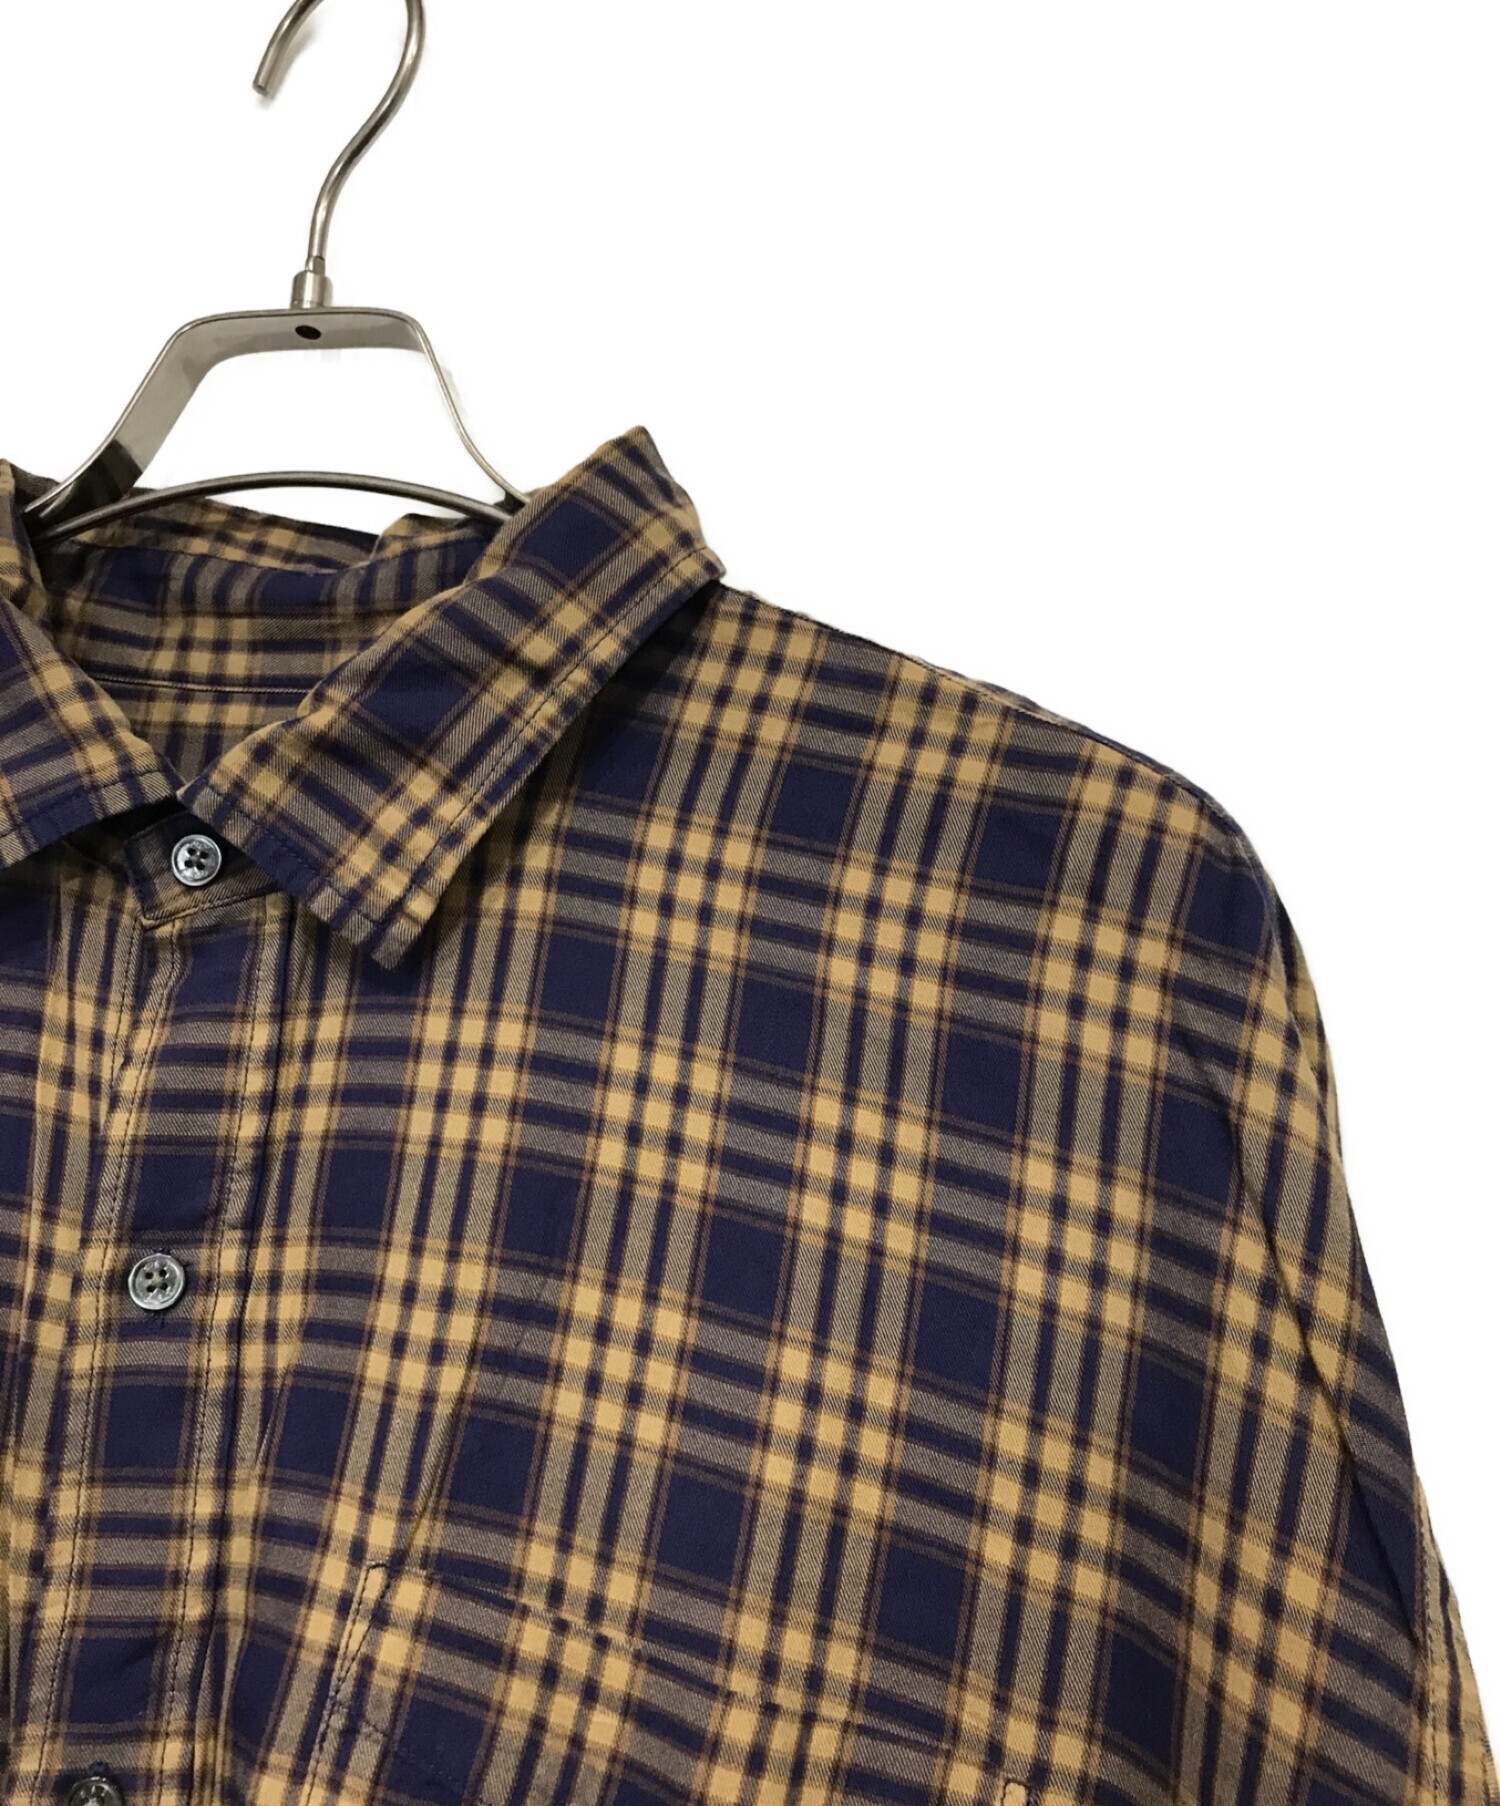 BEAMS (ビームス) SSZ RIDE ON SHIRTS チェックシャツ ブラウン×ネイビー サイズ:L